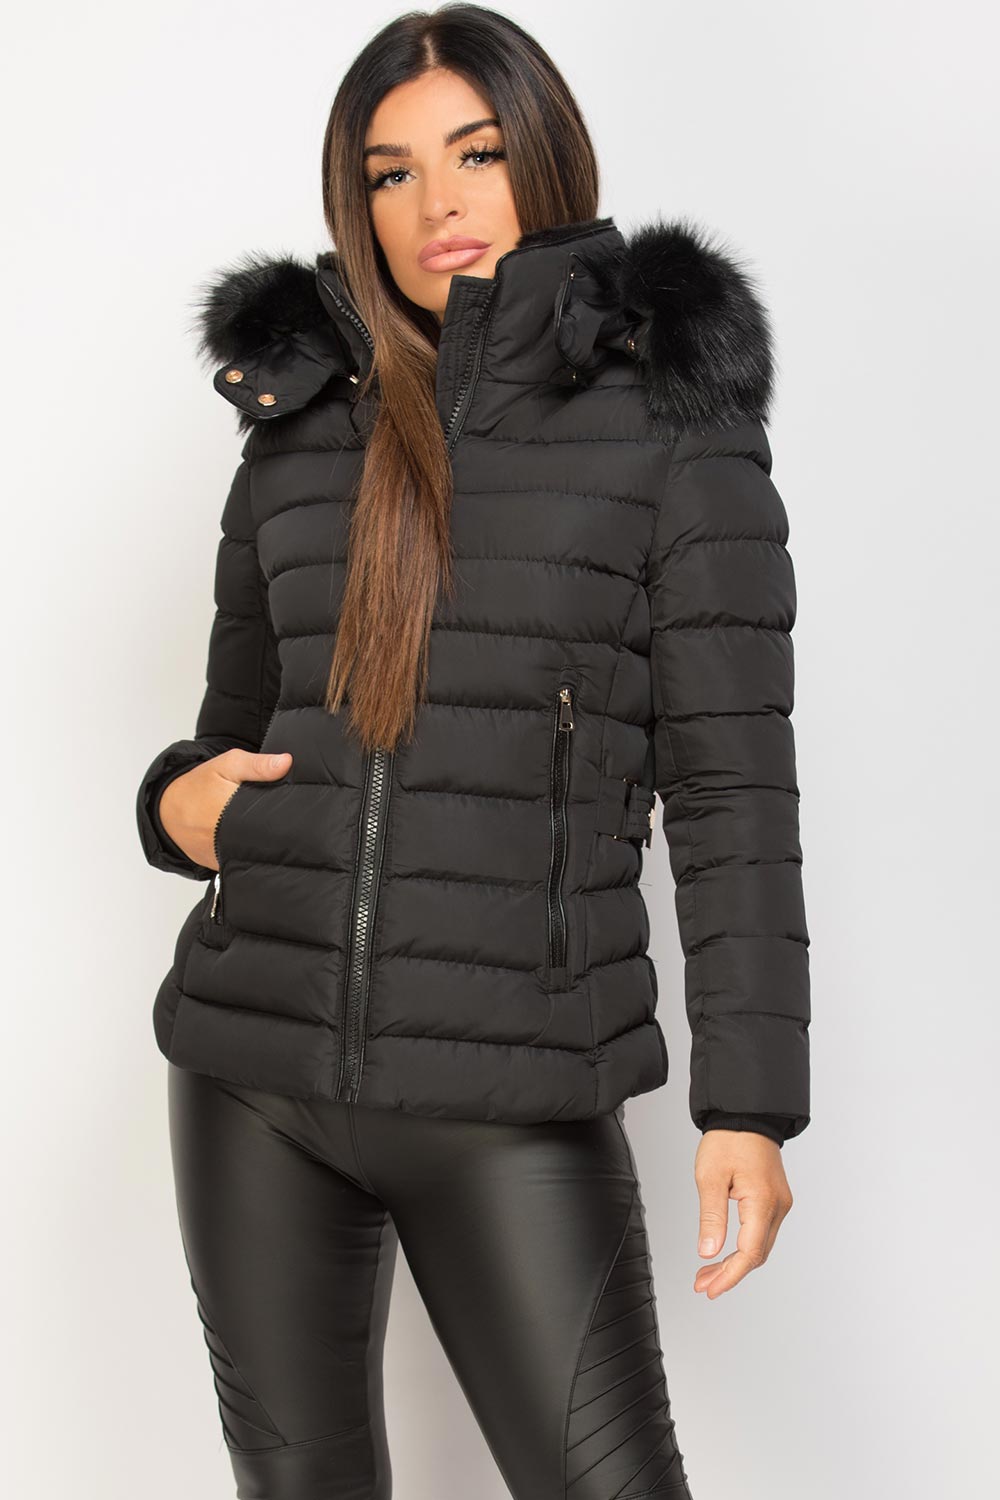 Womens Black Puffer Jacket With Faux Fur Hood Winter Coat – Styledup.co.uk